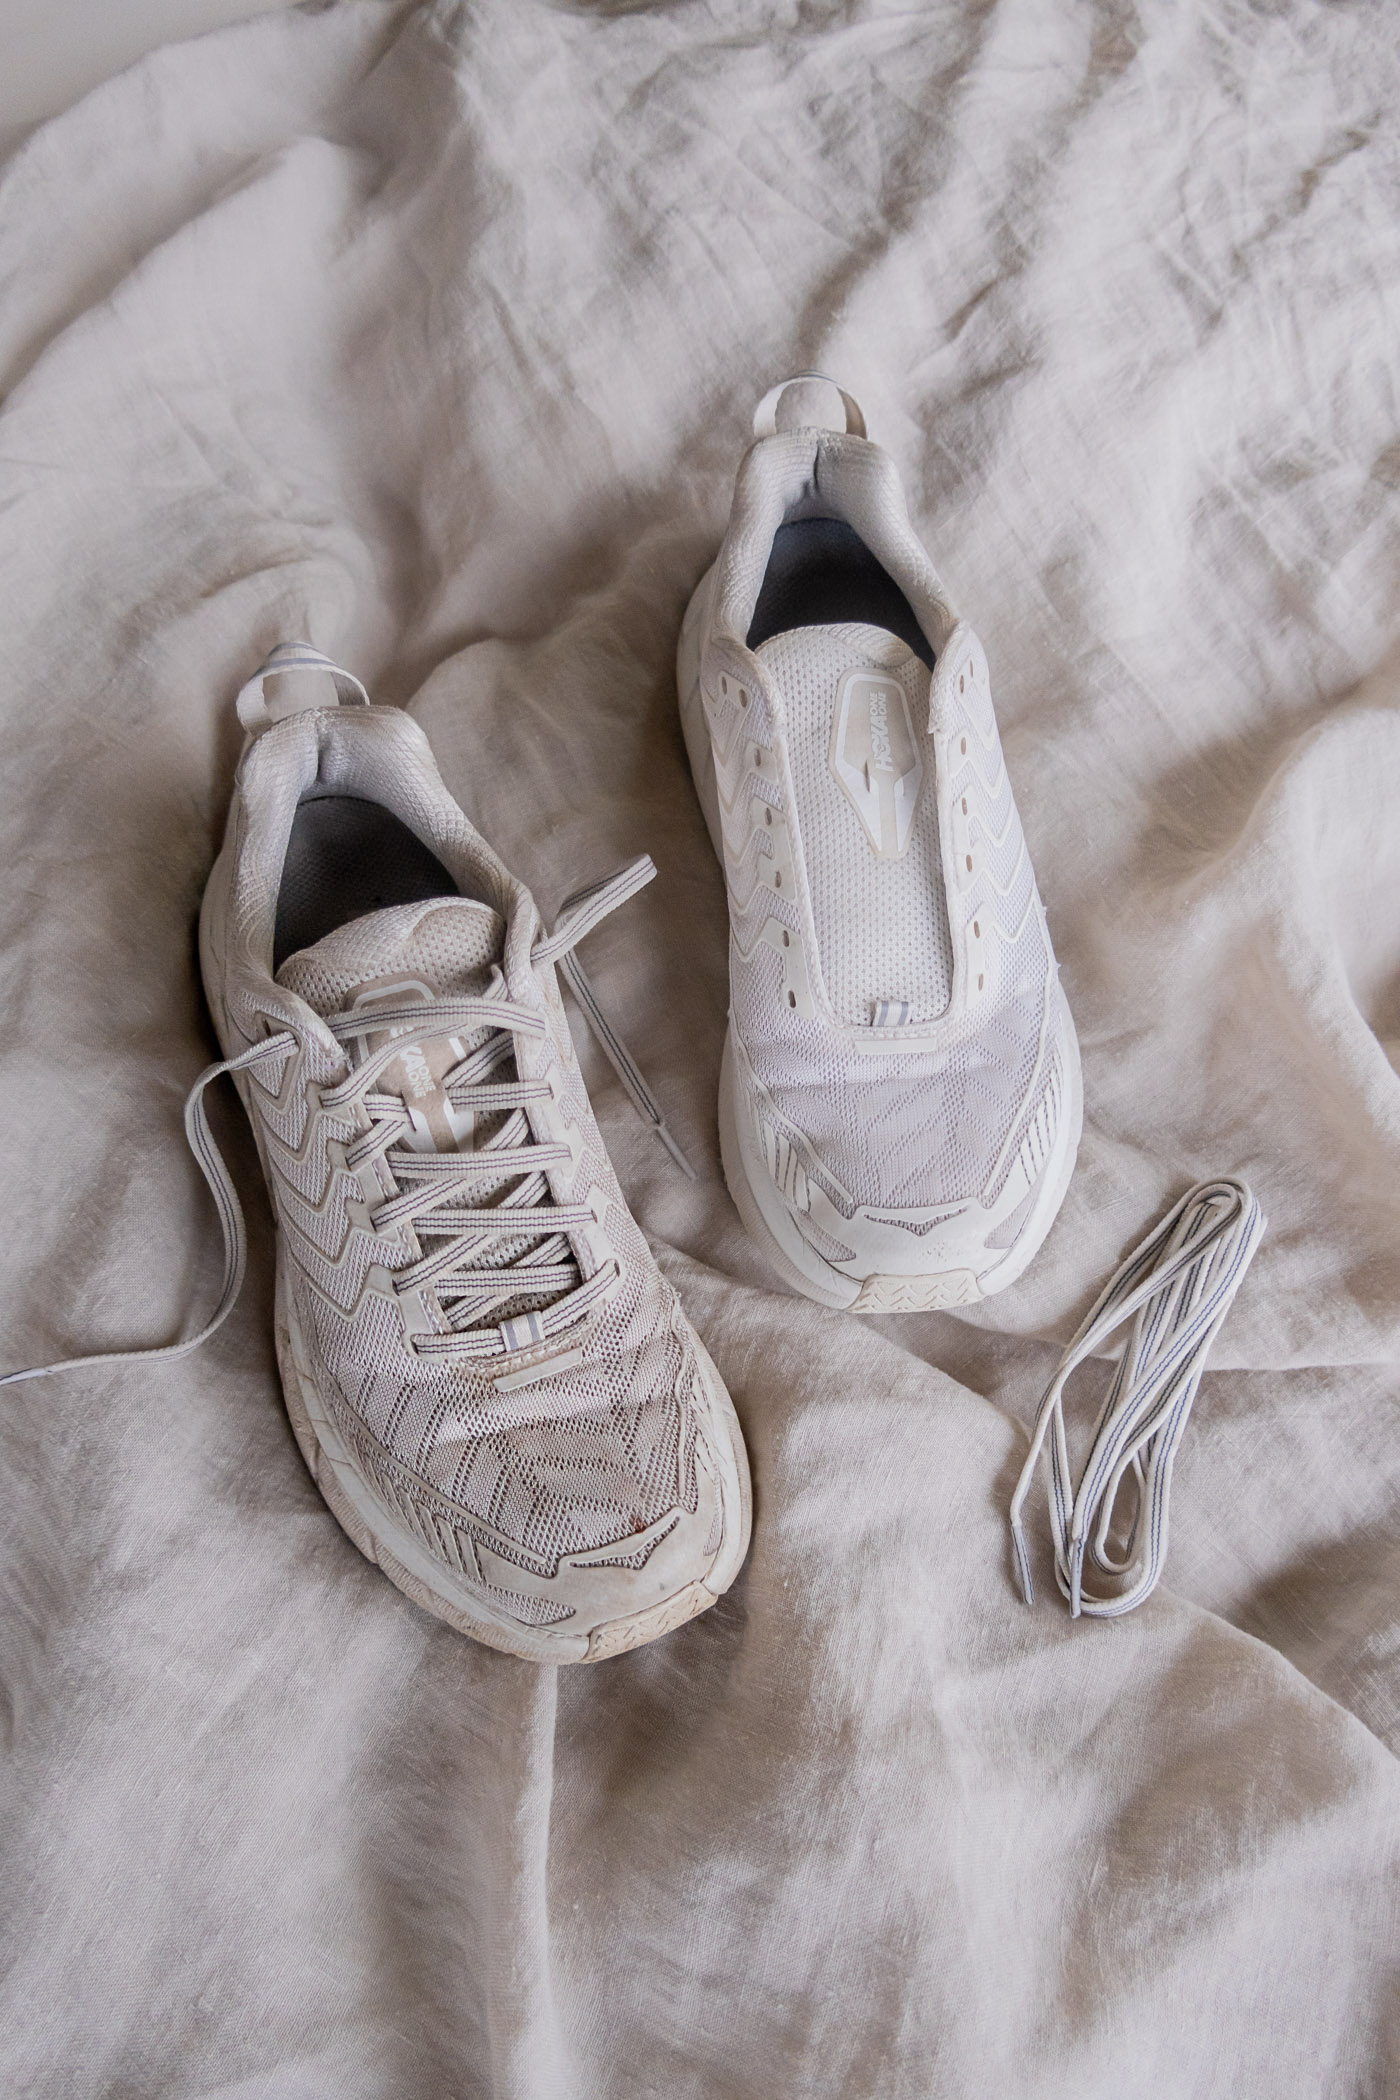 How to Keep White Sneakers White